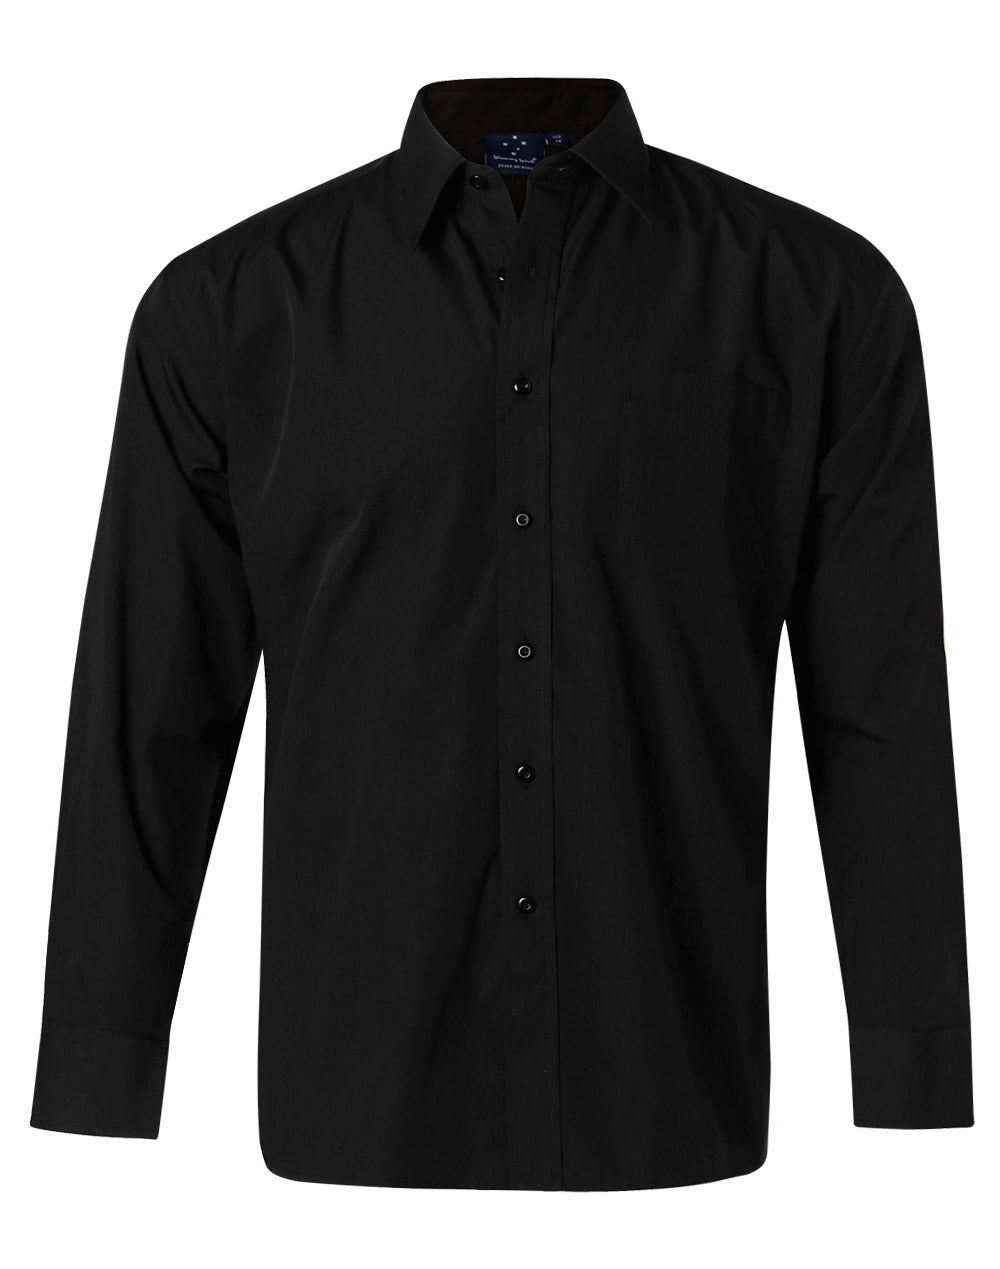 Long Sleeve Poplin Business Shirt - made by AIW